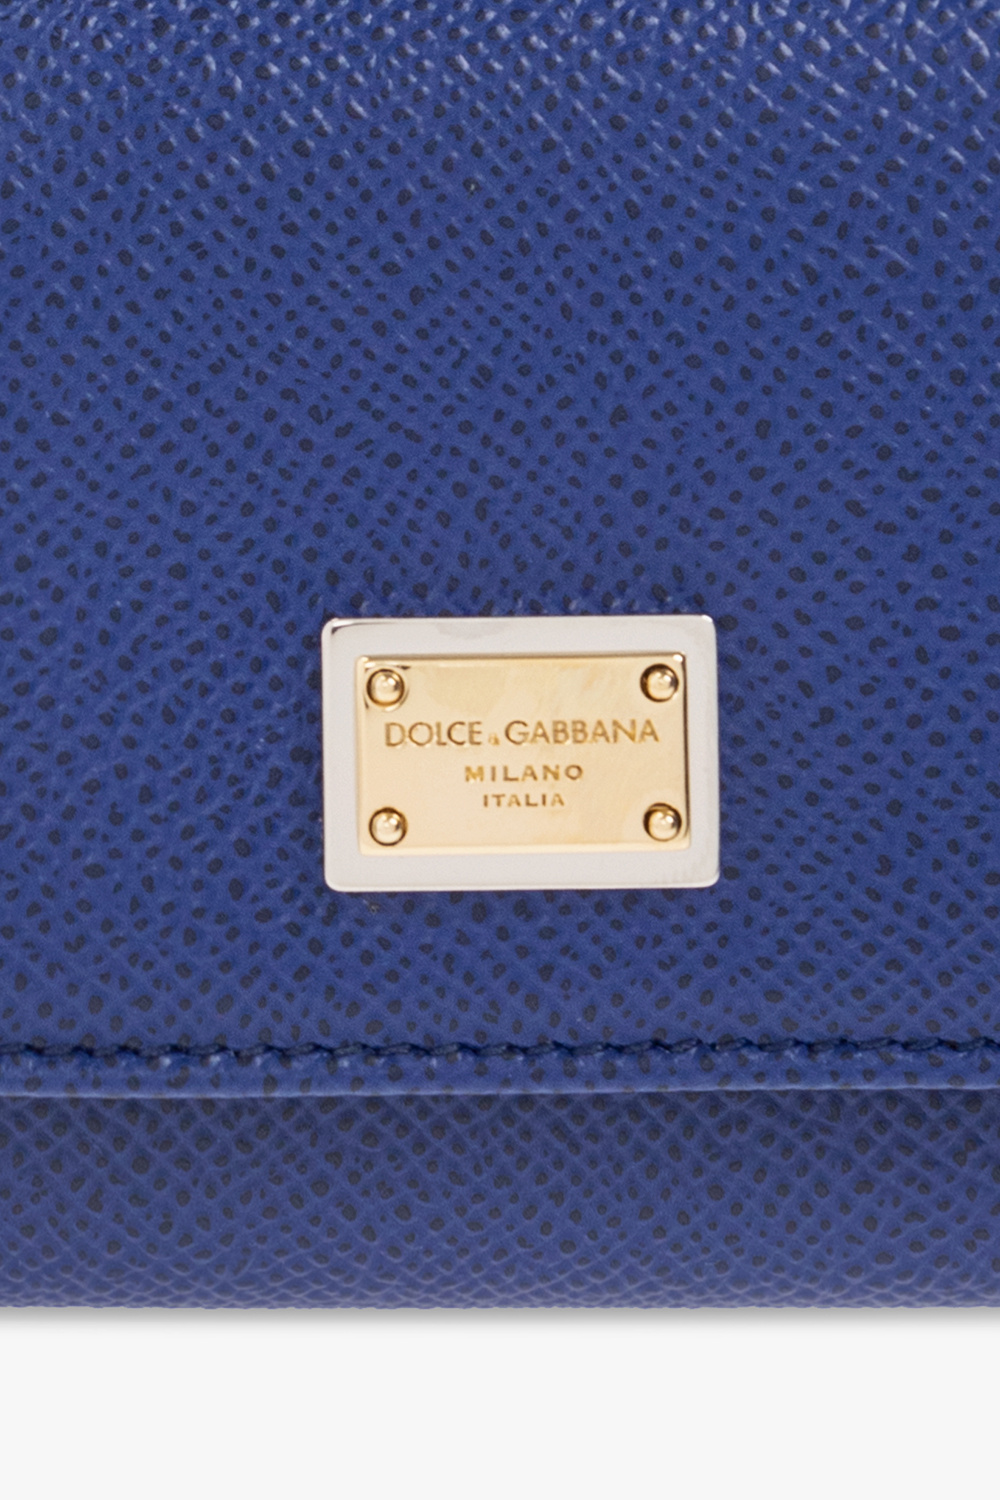 Dolce & Gabbana Intense dolce & Gabbana DG logo compact wallet